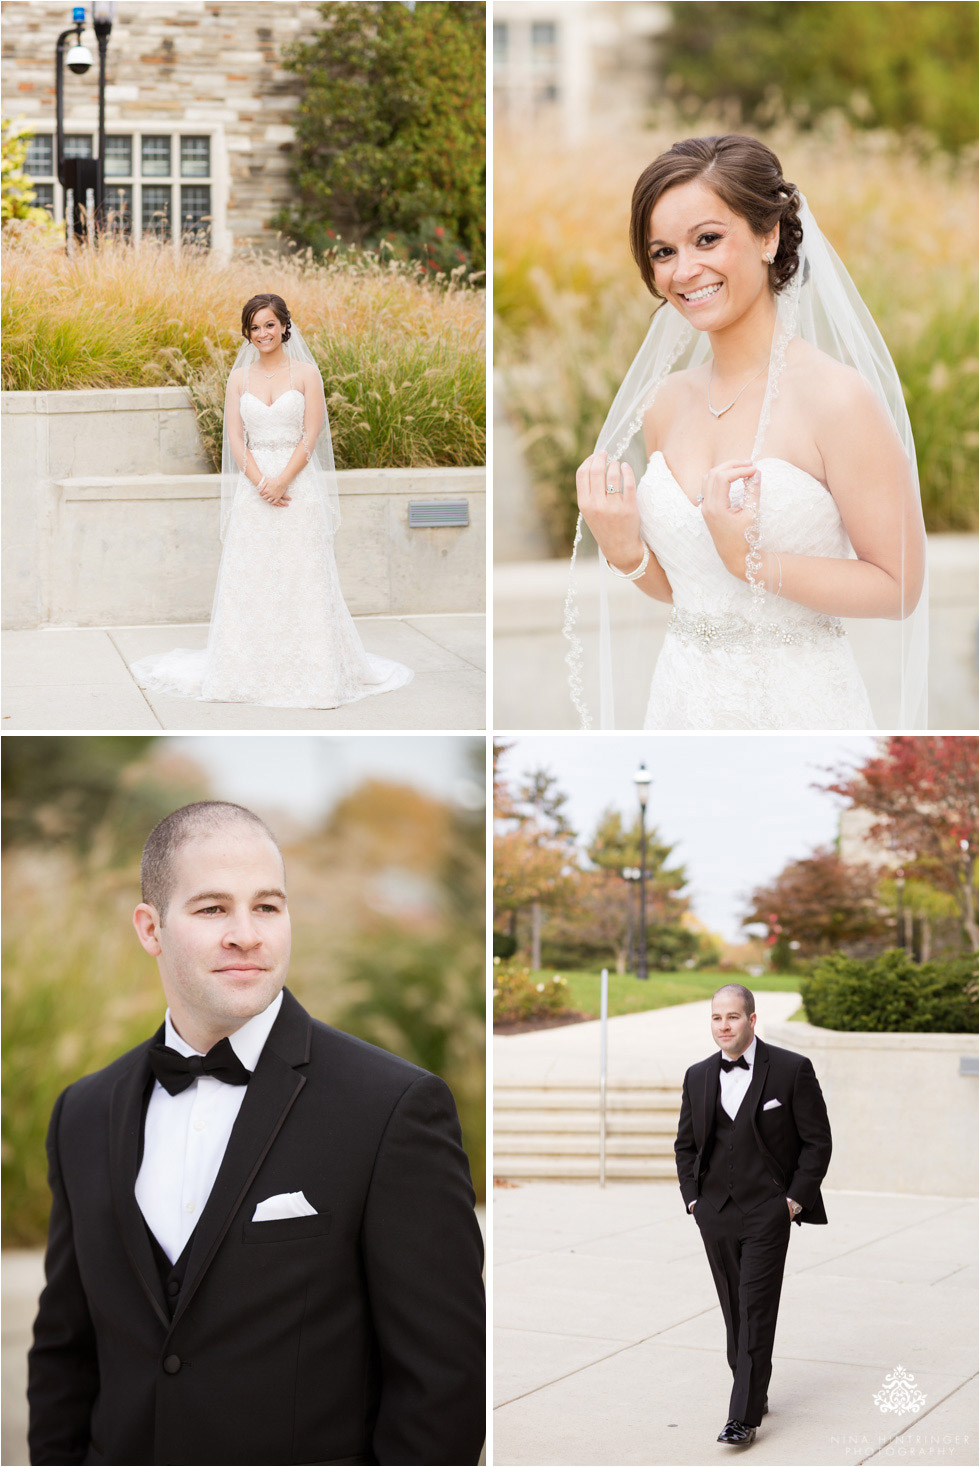 Bridal and groom at Saint Josephs University campus in Philadelphia, Pennsylvania - Blog of Nina Hintringer Photography - Wedding Photography, Wedding Reportage and Destination Weddings